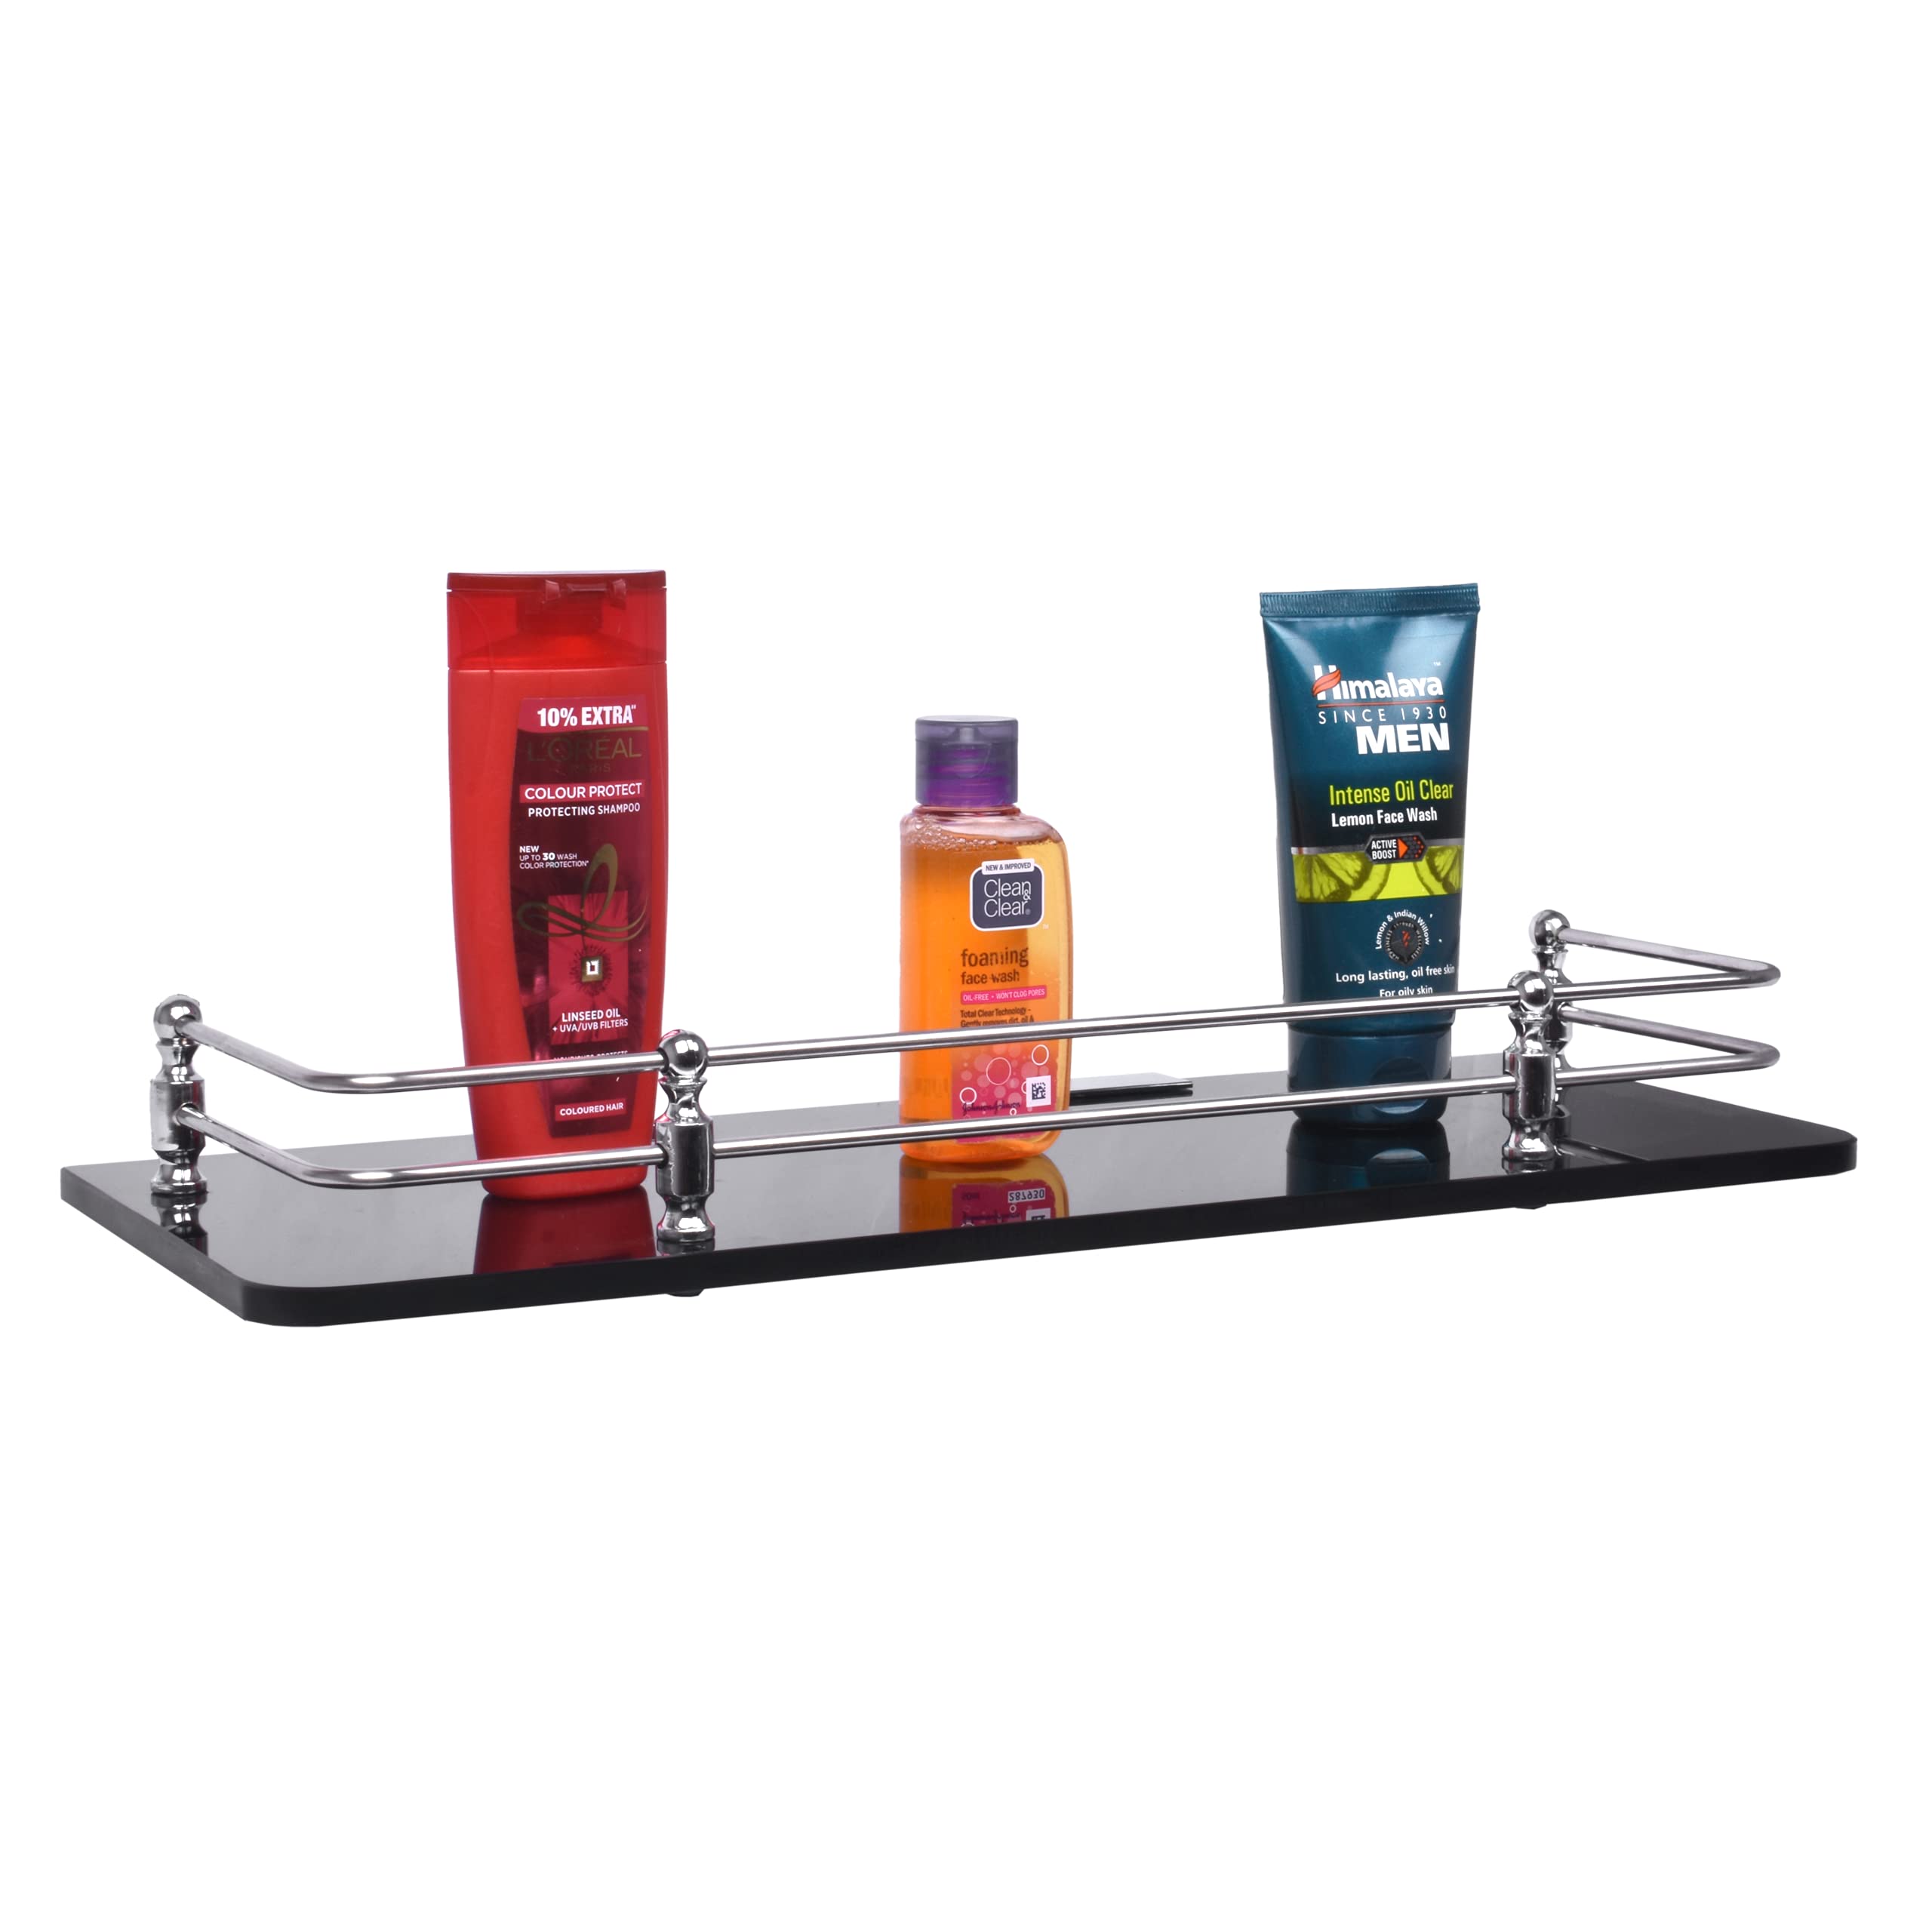 Plantex Premium Black Glass Shelf for Bathroom/Kitchen/Living Room - Bathroom Accessories (Polished, 18x6 Inches) - Pack of 3